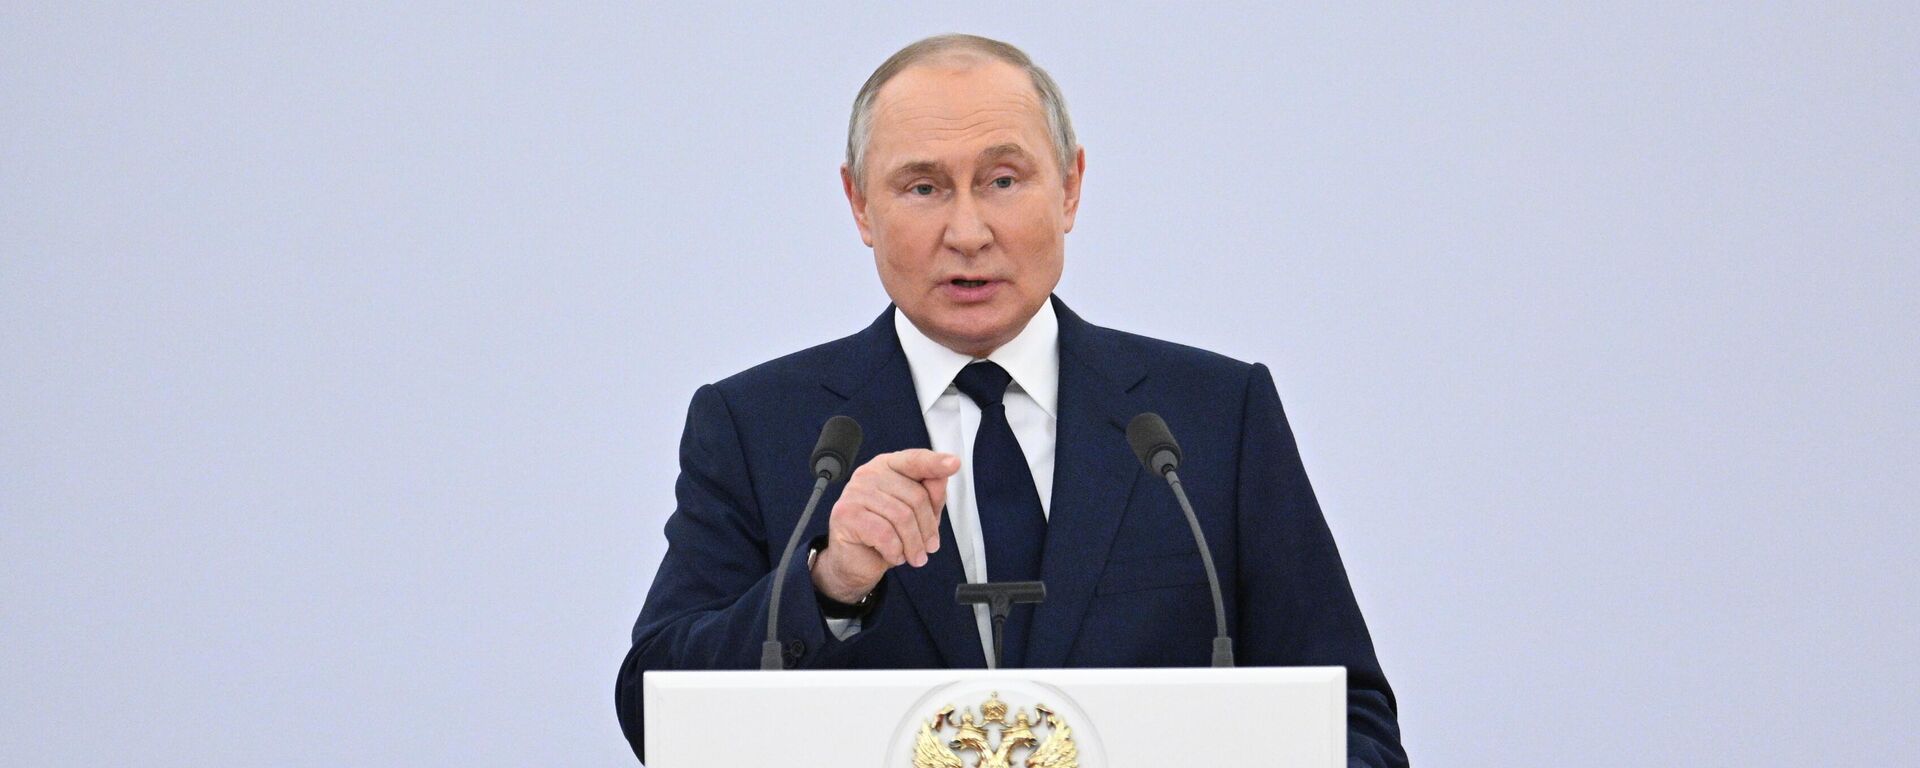 Rusijos prezidentas Vladimiras Putinas - Sputnik Lietuva, 1920, 27.04.2022